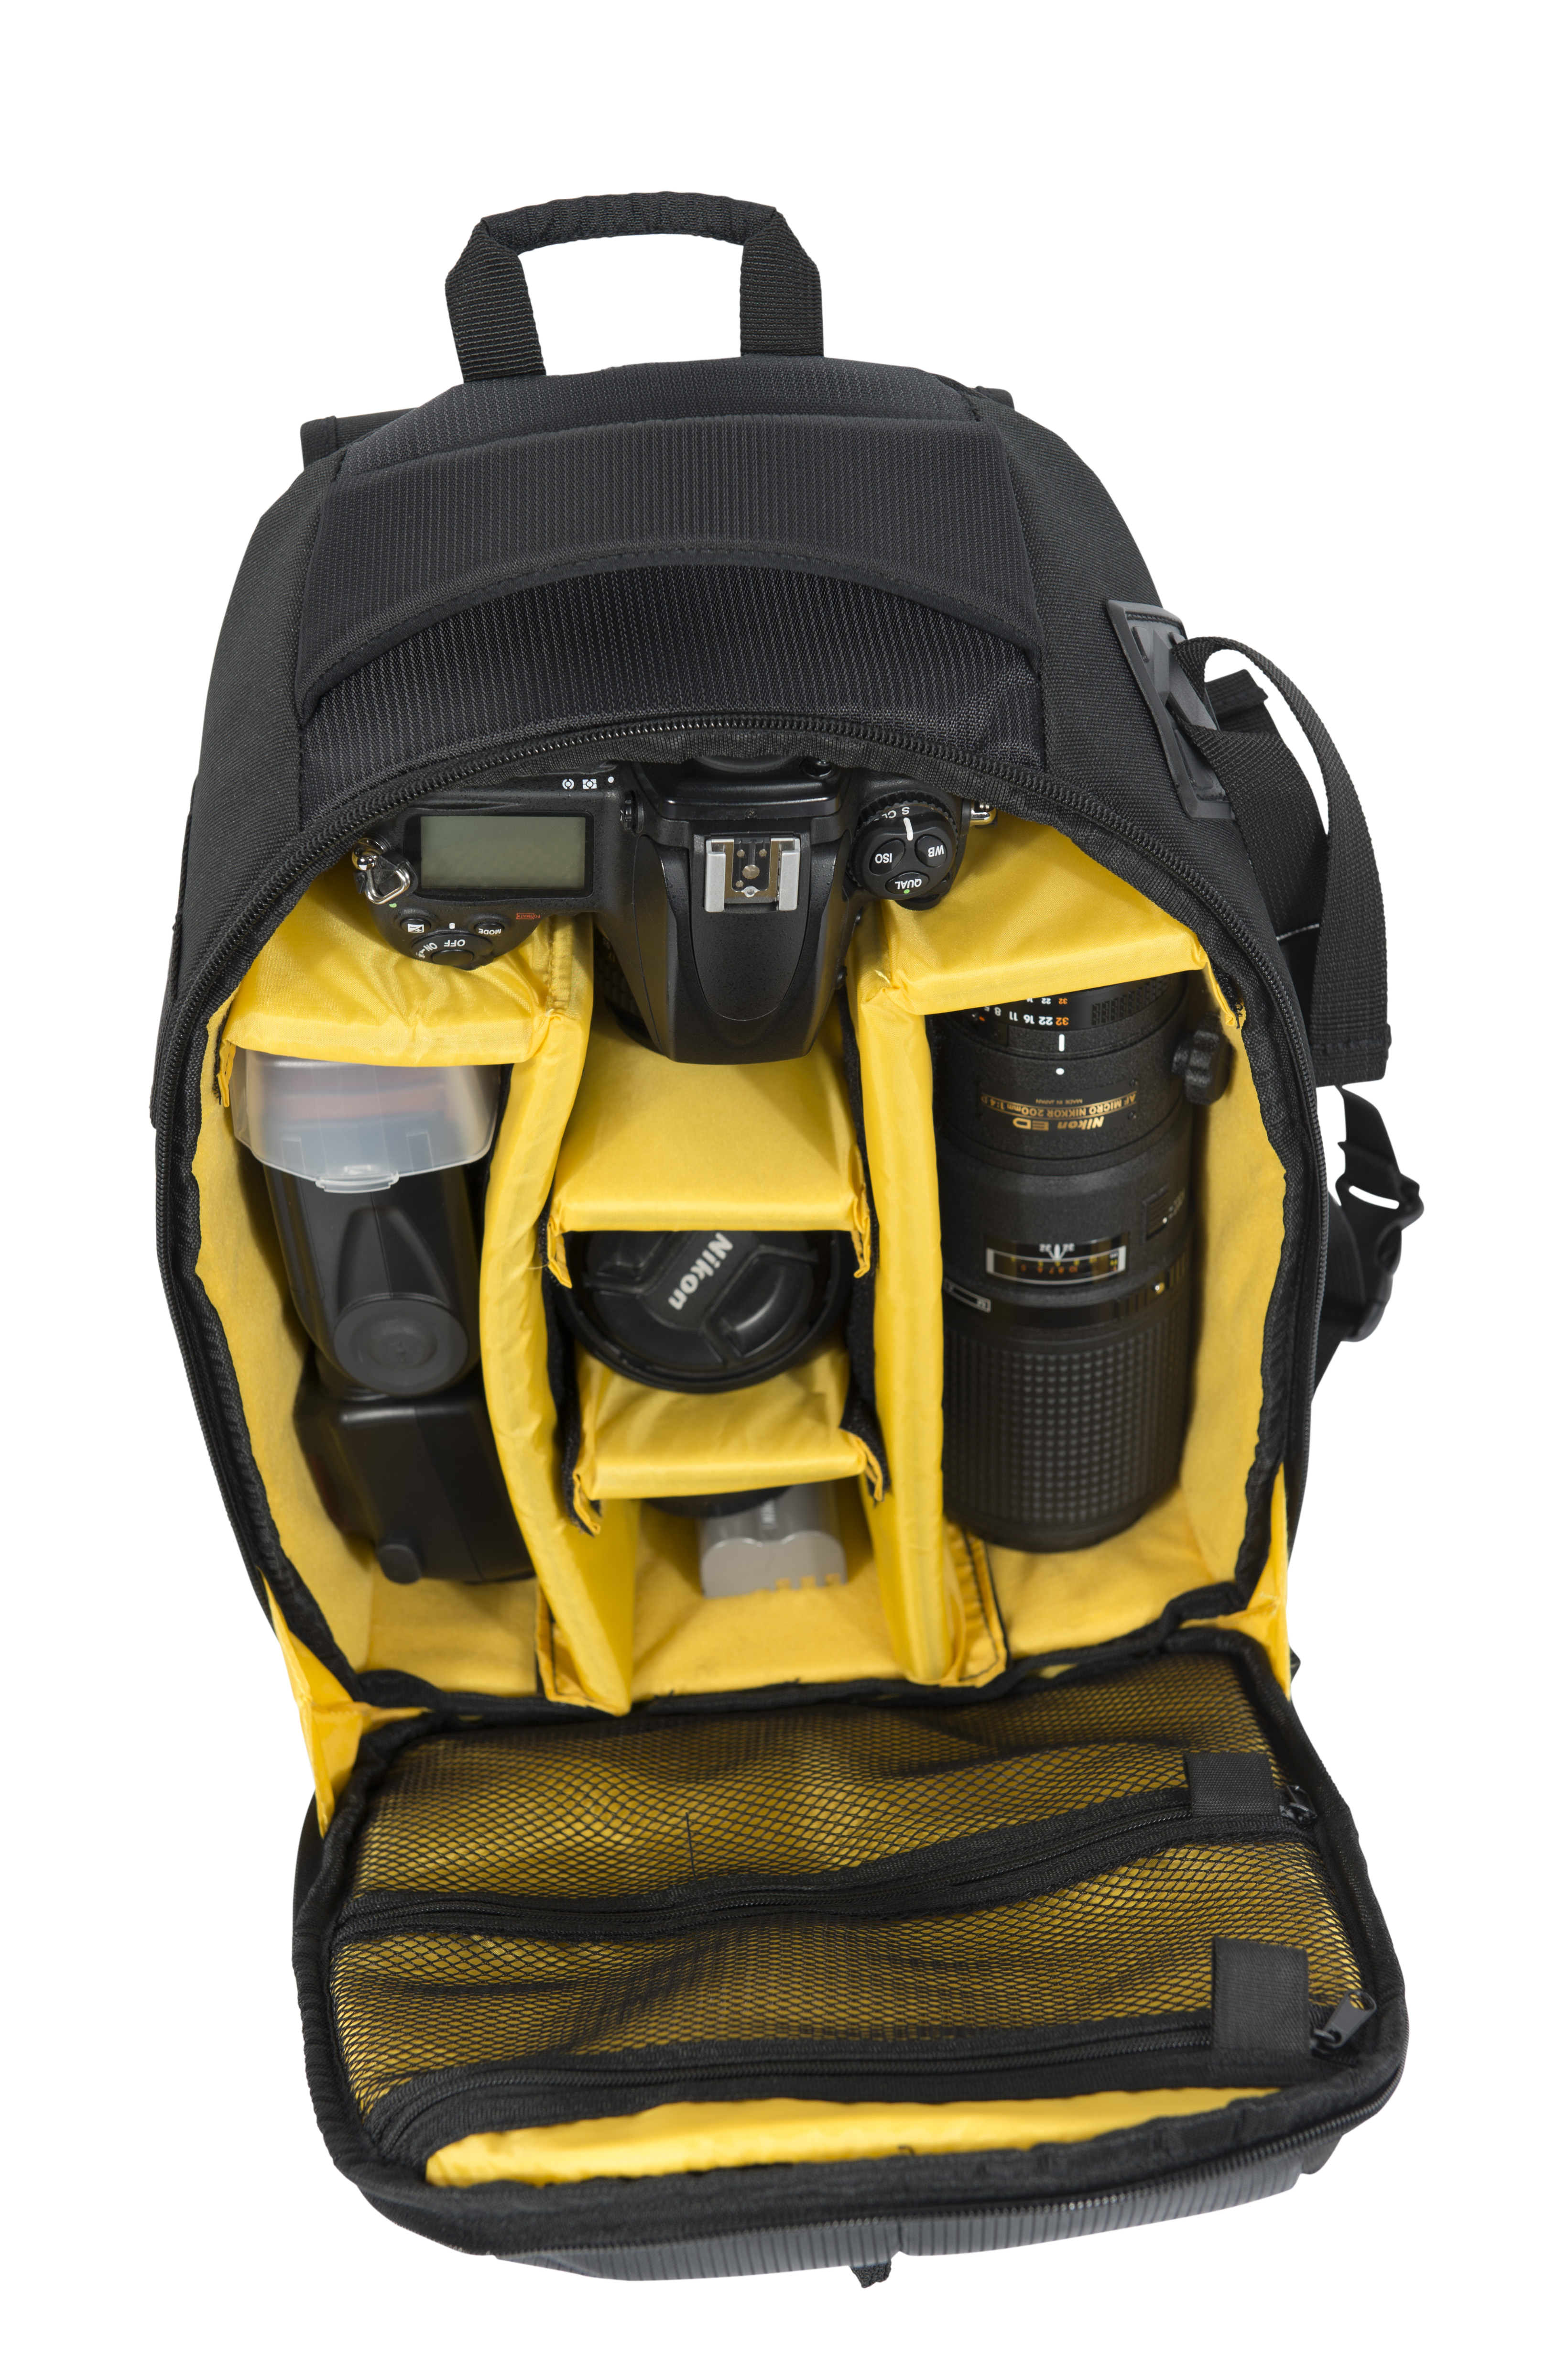 Atlas Sleek Professional multi-purpose Photo SLR laptop Backpack